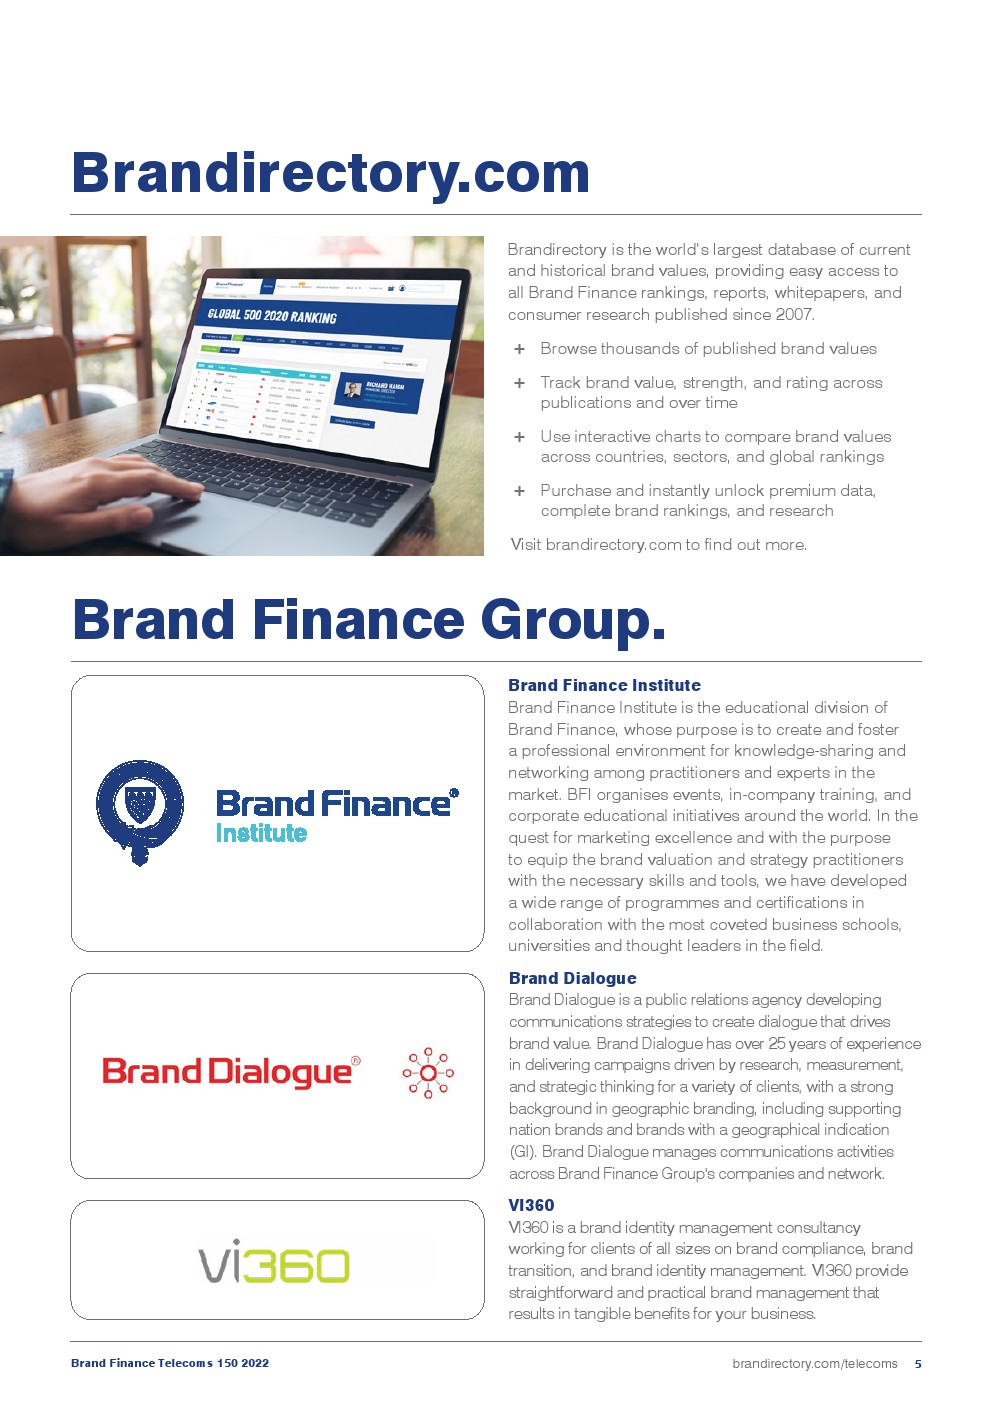 Brand Finance：2022年全球电信行业150强报告